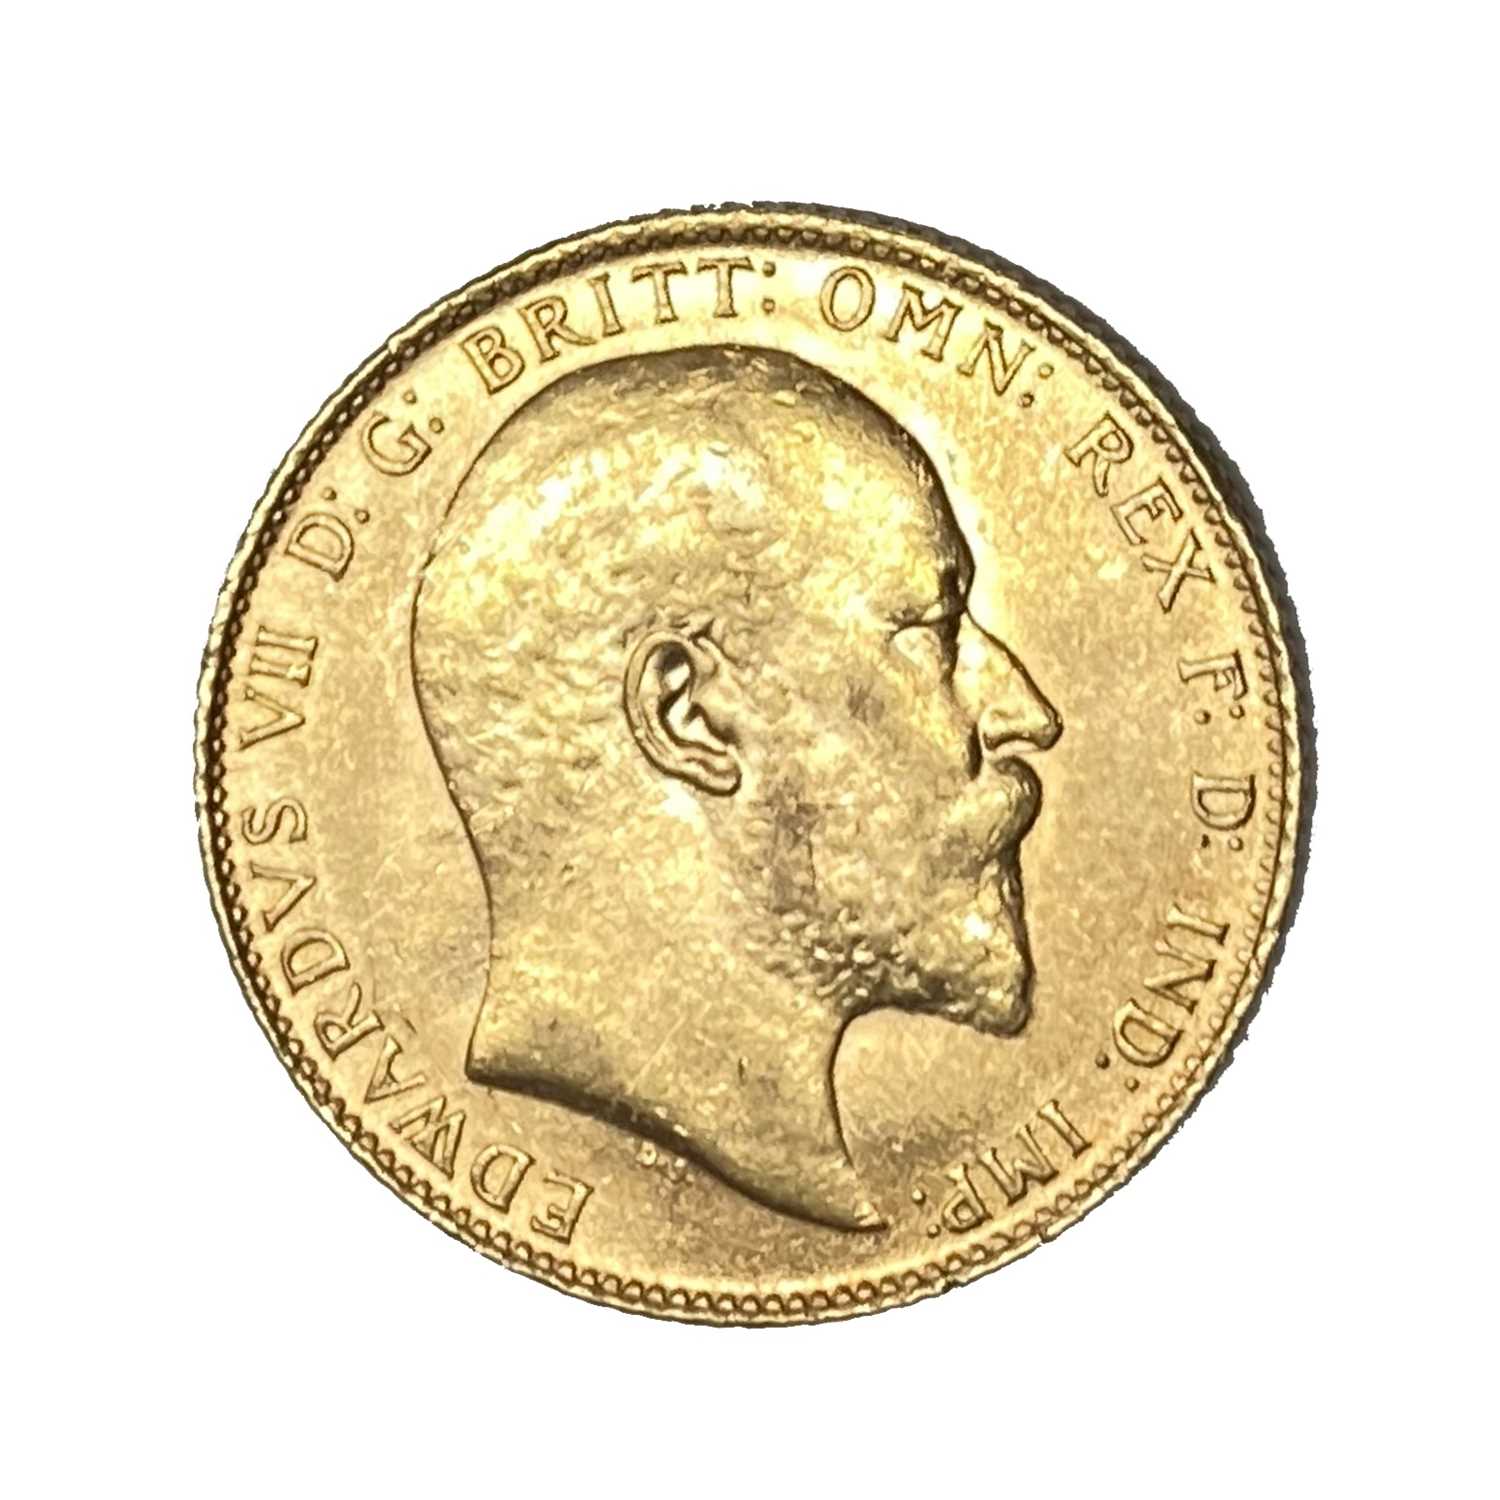 Lot 22 - Edward VII gold Sovereign coin, 1906